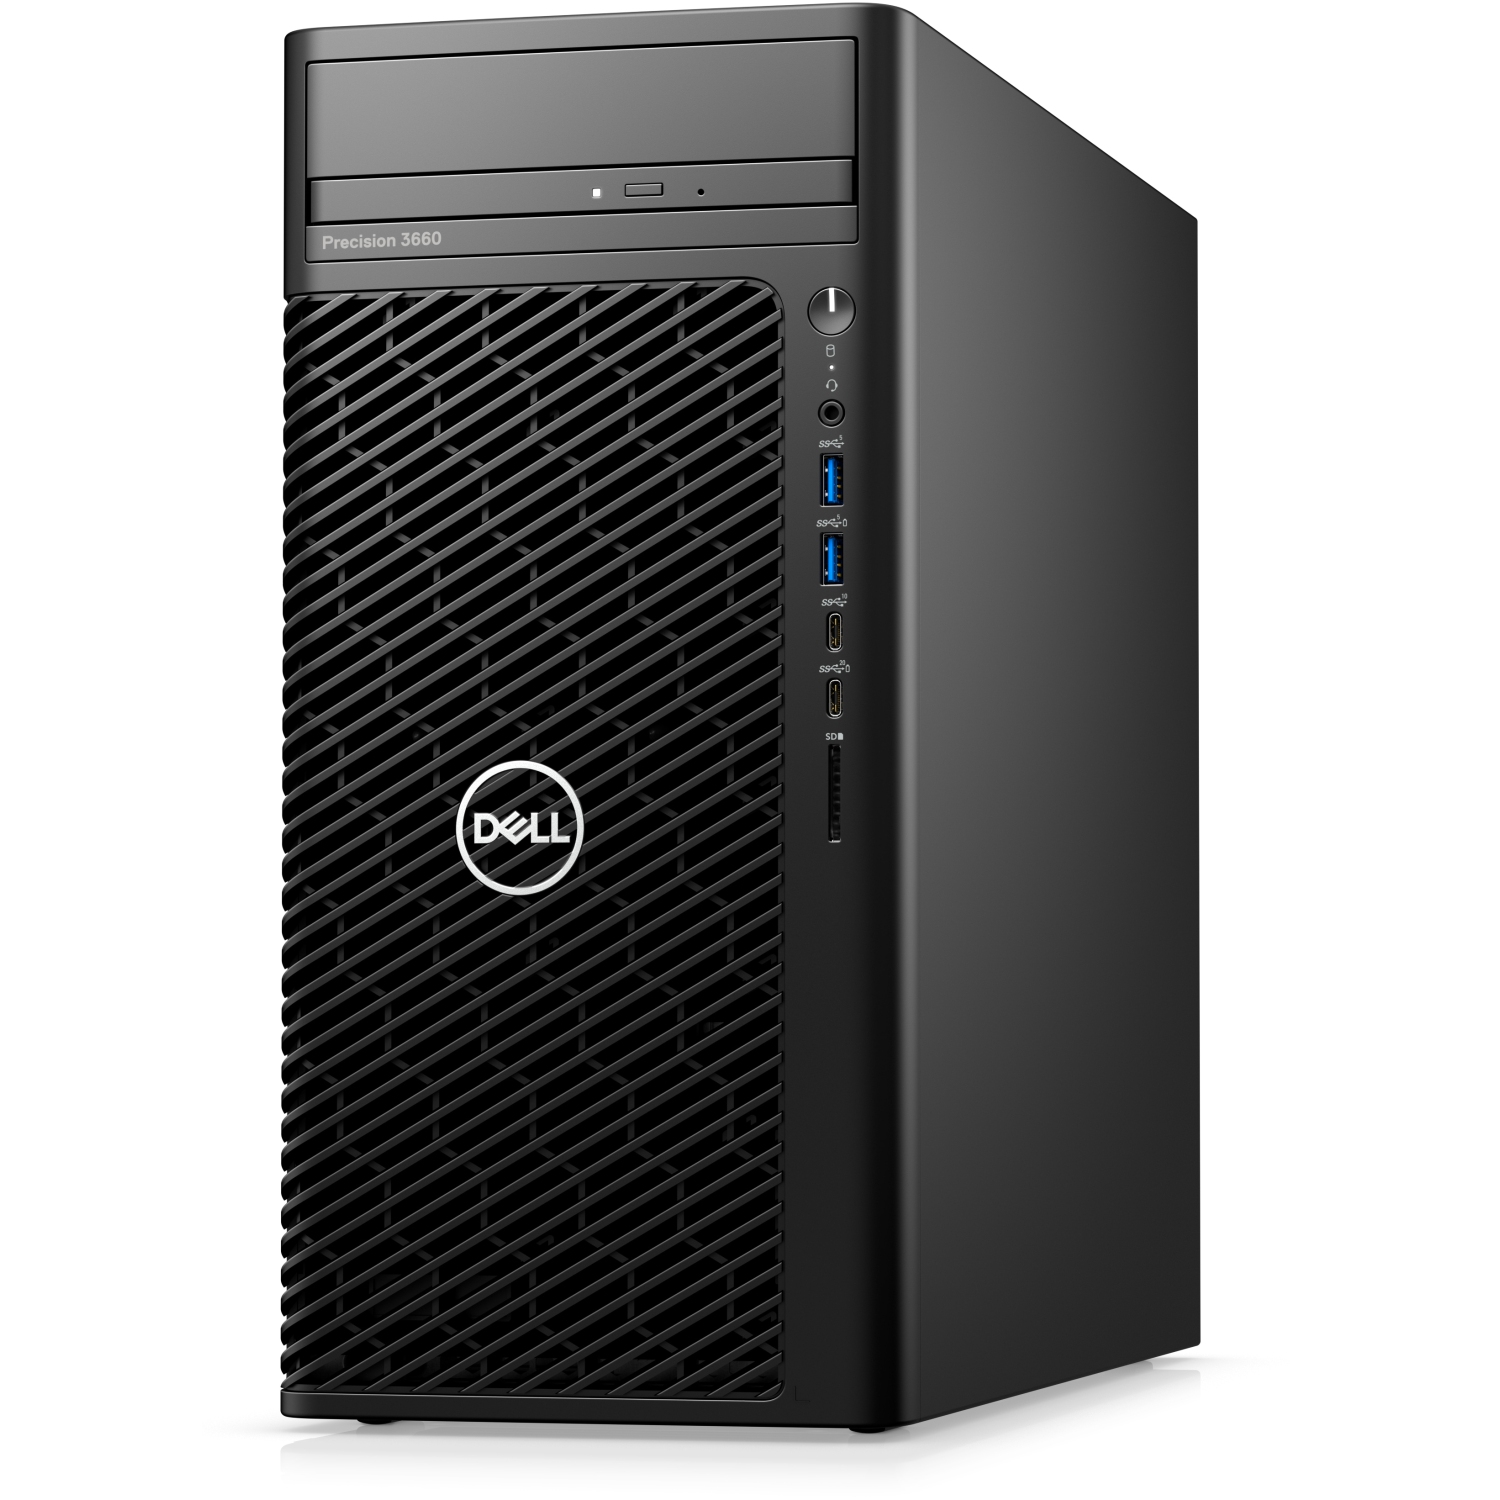 Refurbished (Excellent) – Dell Precision T3660 Workstation Desktop (2022) | Core i9 - 2TB HDD + 1TB SSD - 64GB RAM - RTX 3090 | 16 Cores @ 5.2 GHz - 12th Gen CPU - 24GB GDDR6X